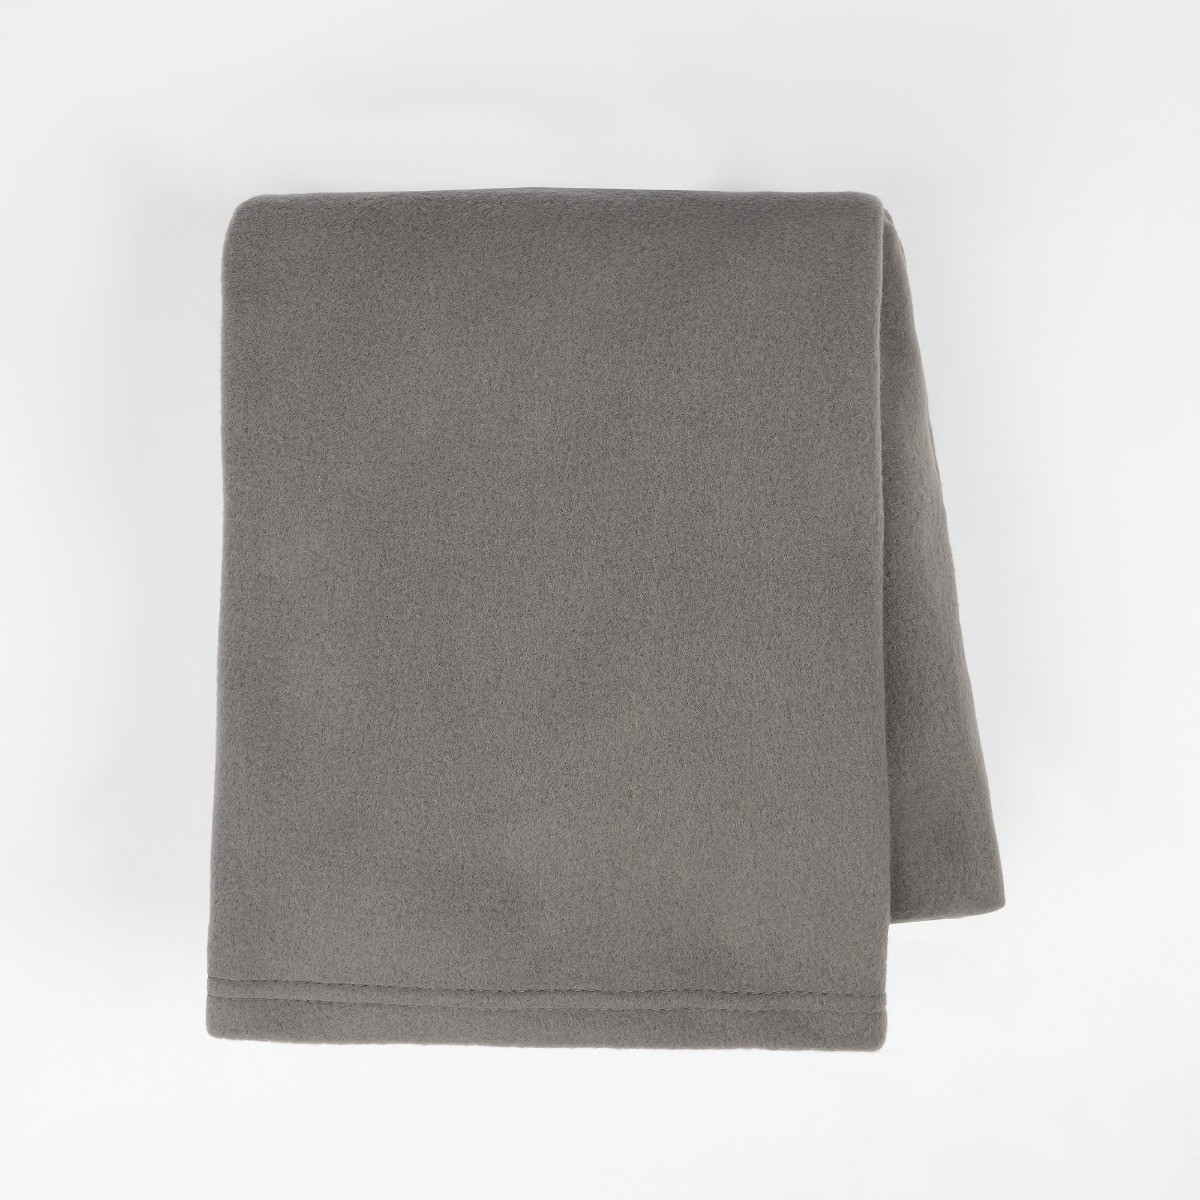 Dreamscene Plain Fleece Throw, Charcoal - 120 x 150 cm>